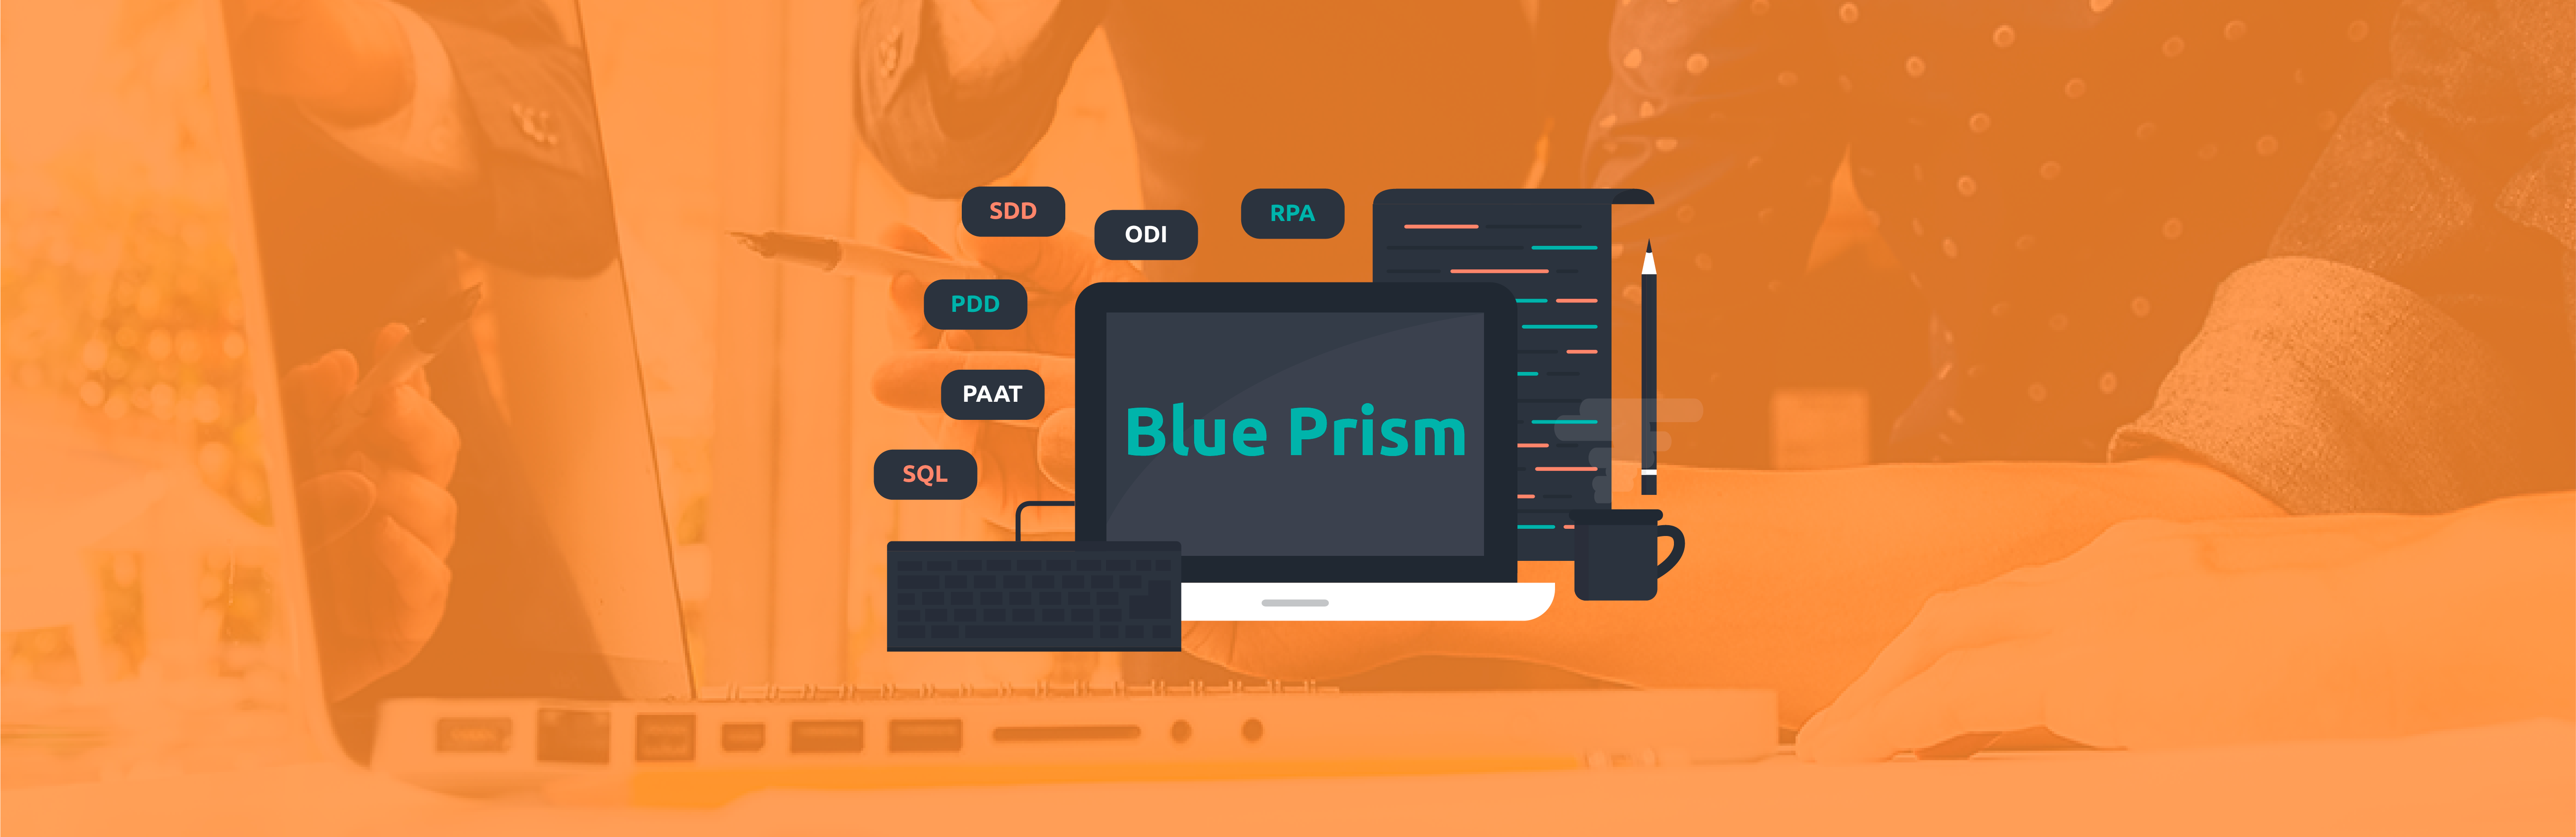 Blue prism robot software training center